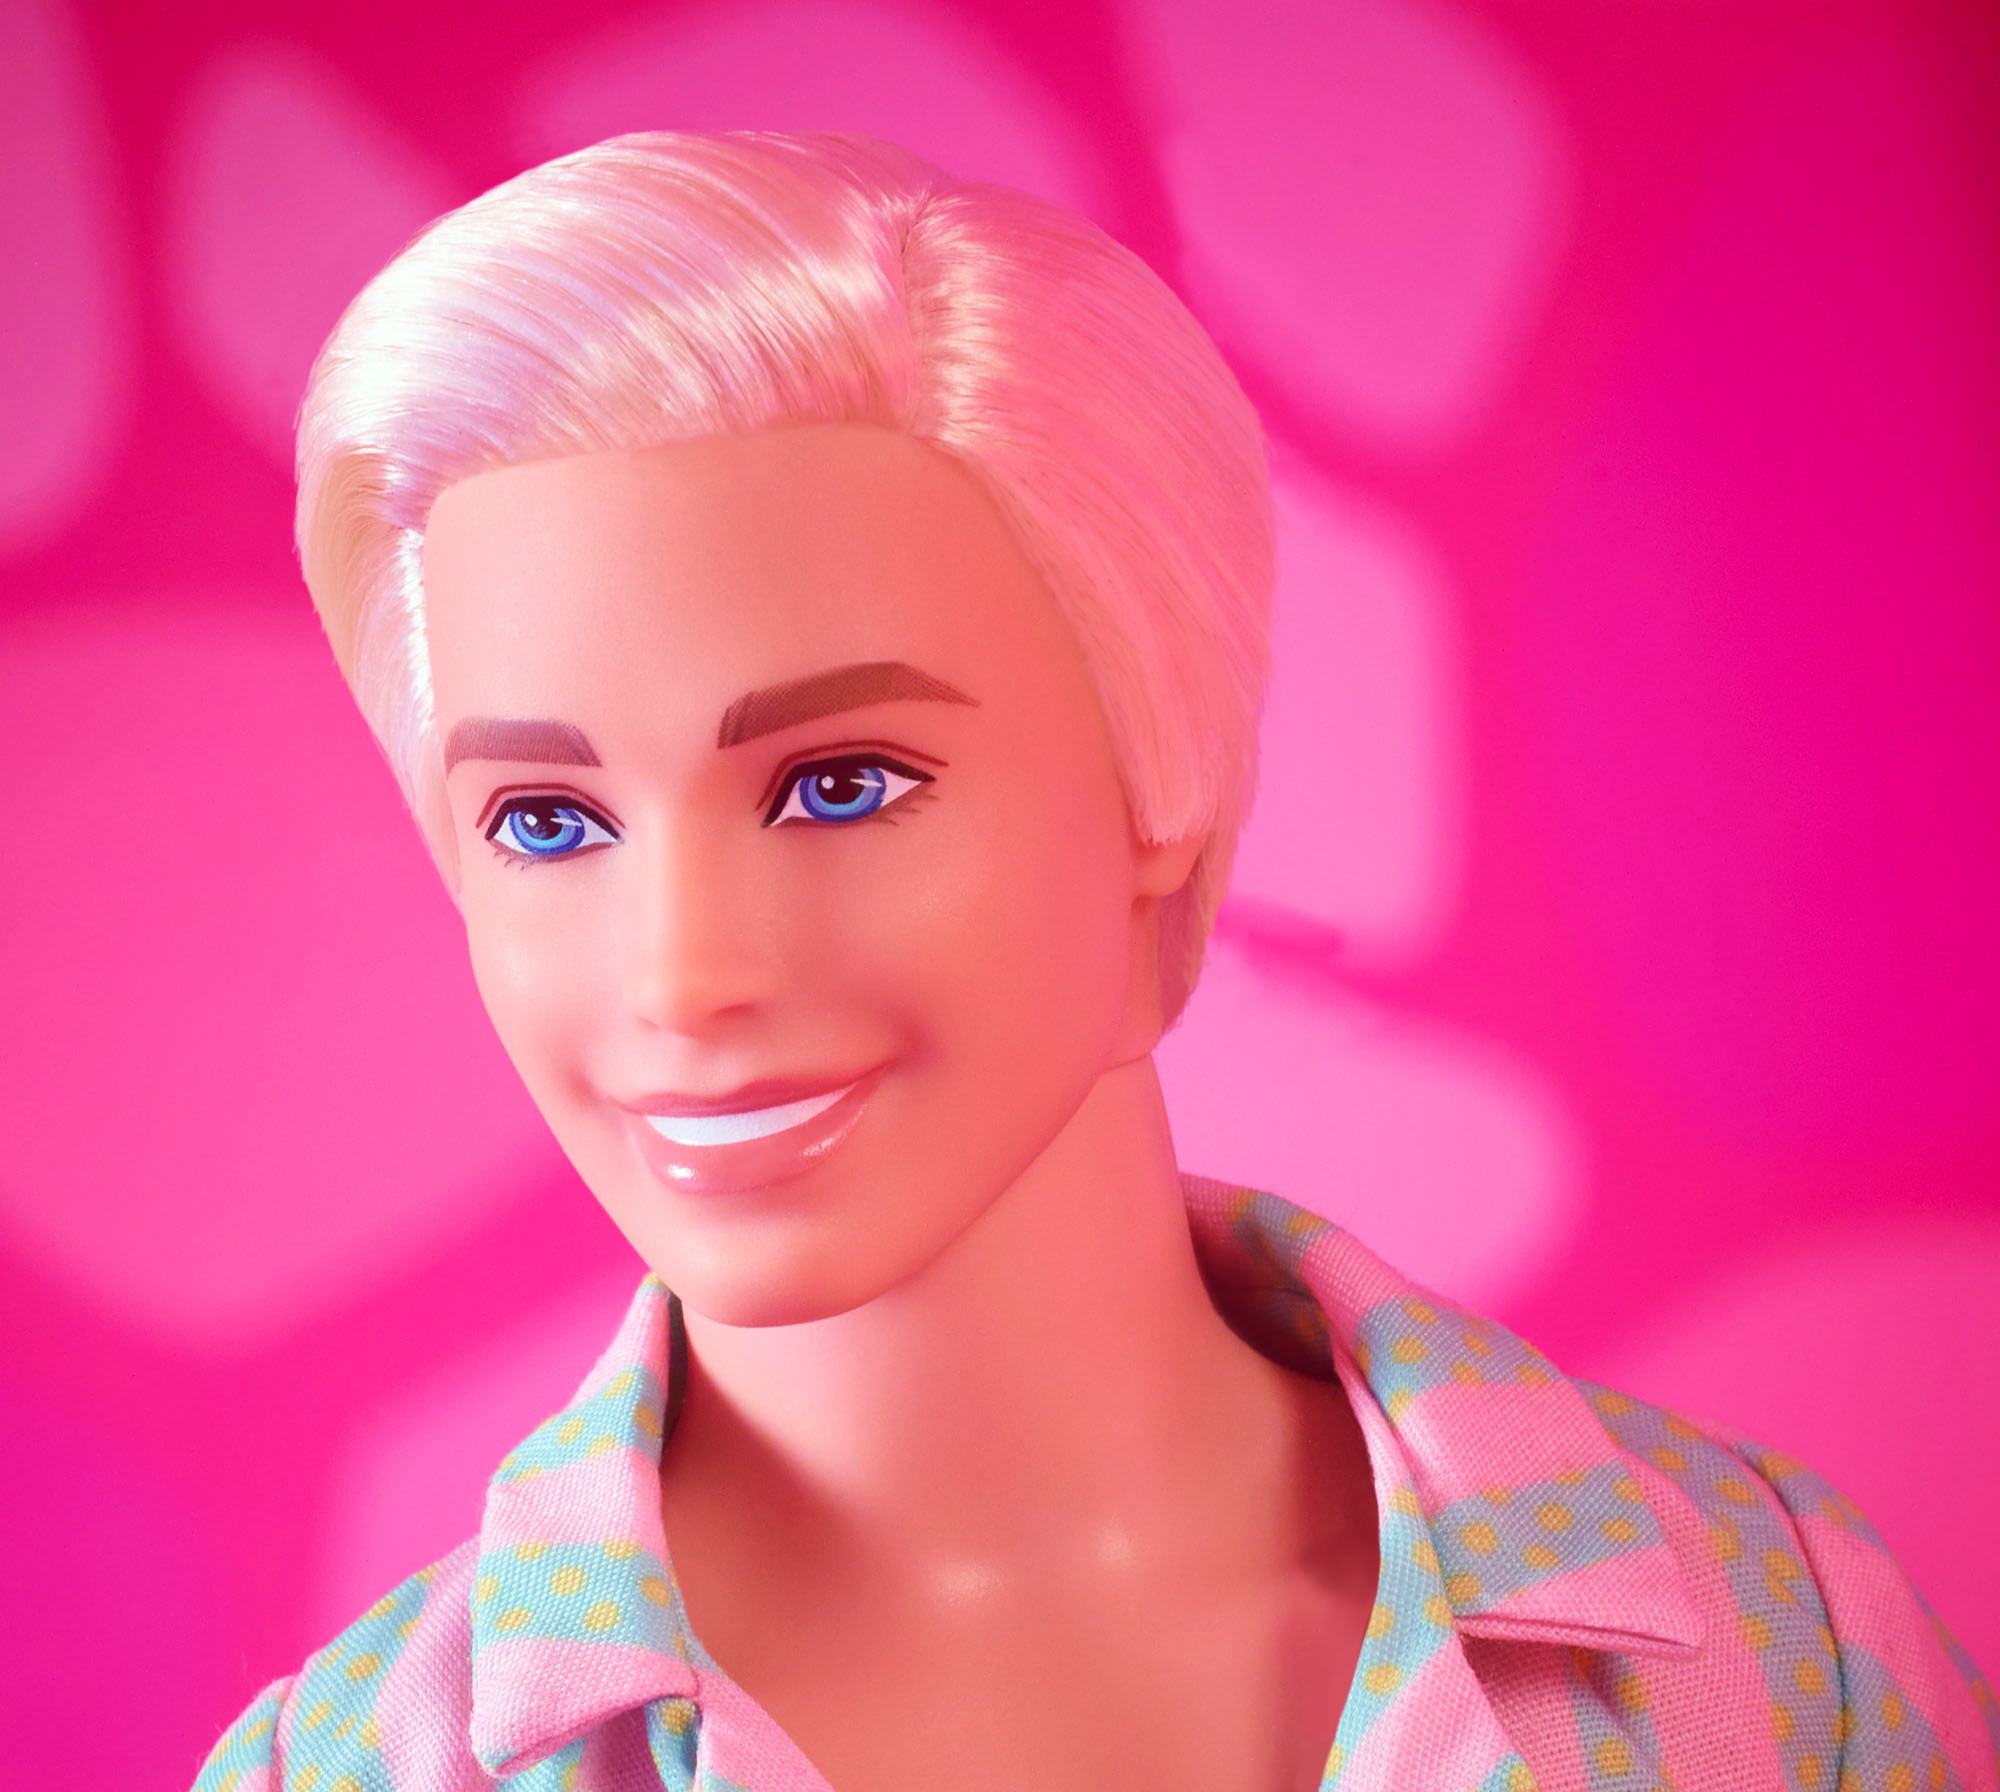 Barbie™ The Movie Ken Doll